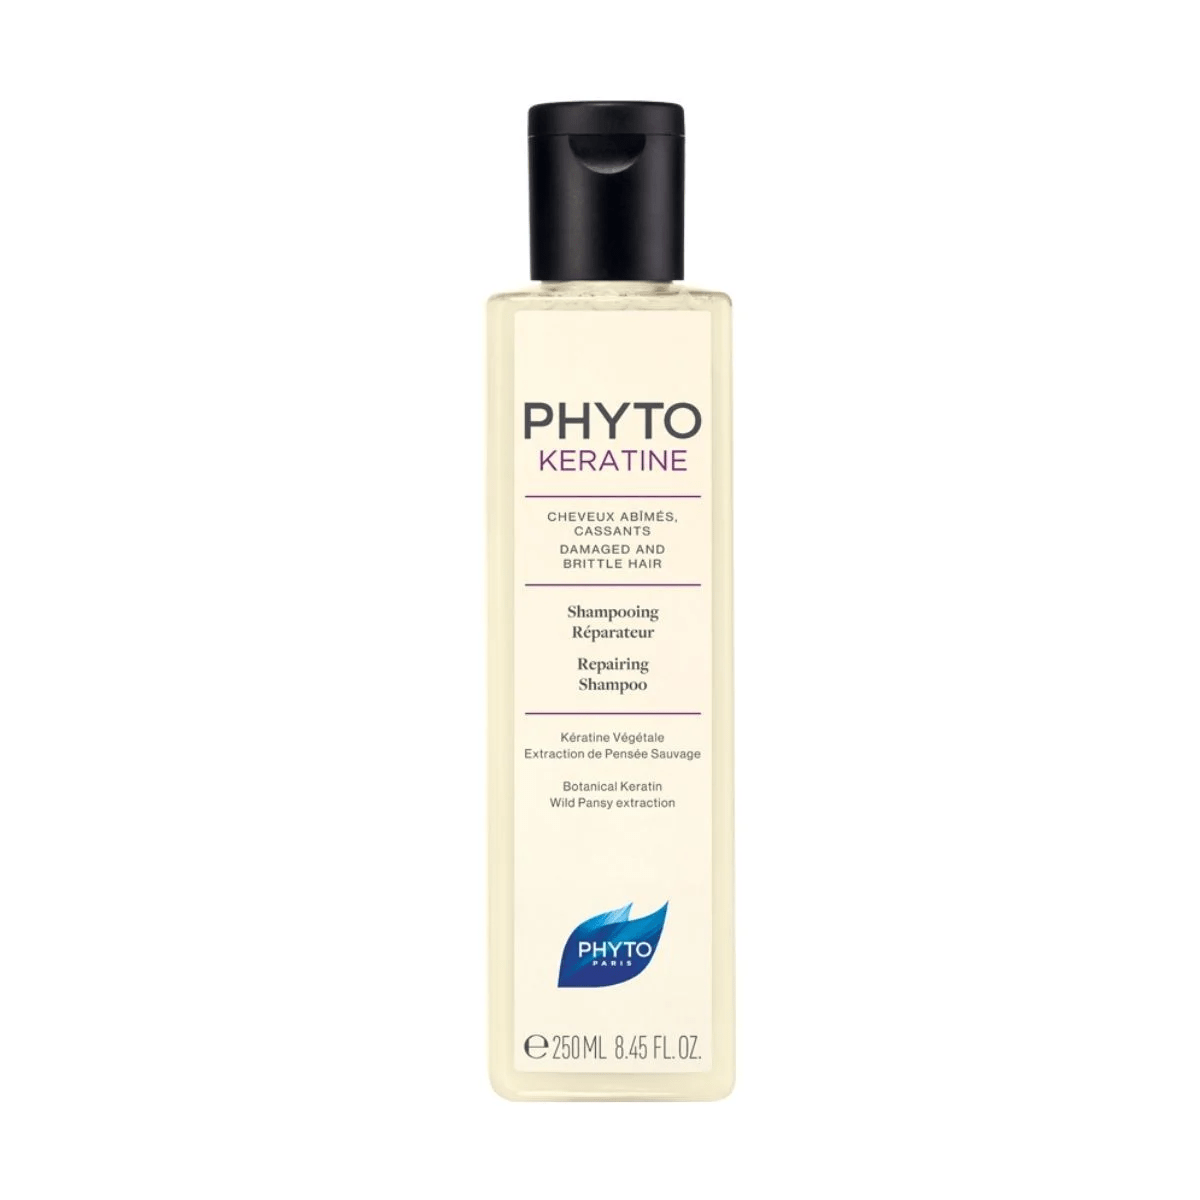 PHYTO Soins & Beauté Phytokeratine (shampoing réparateur) 250ml